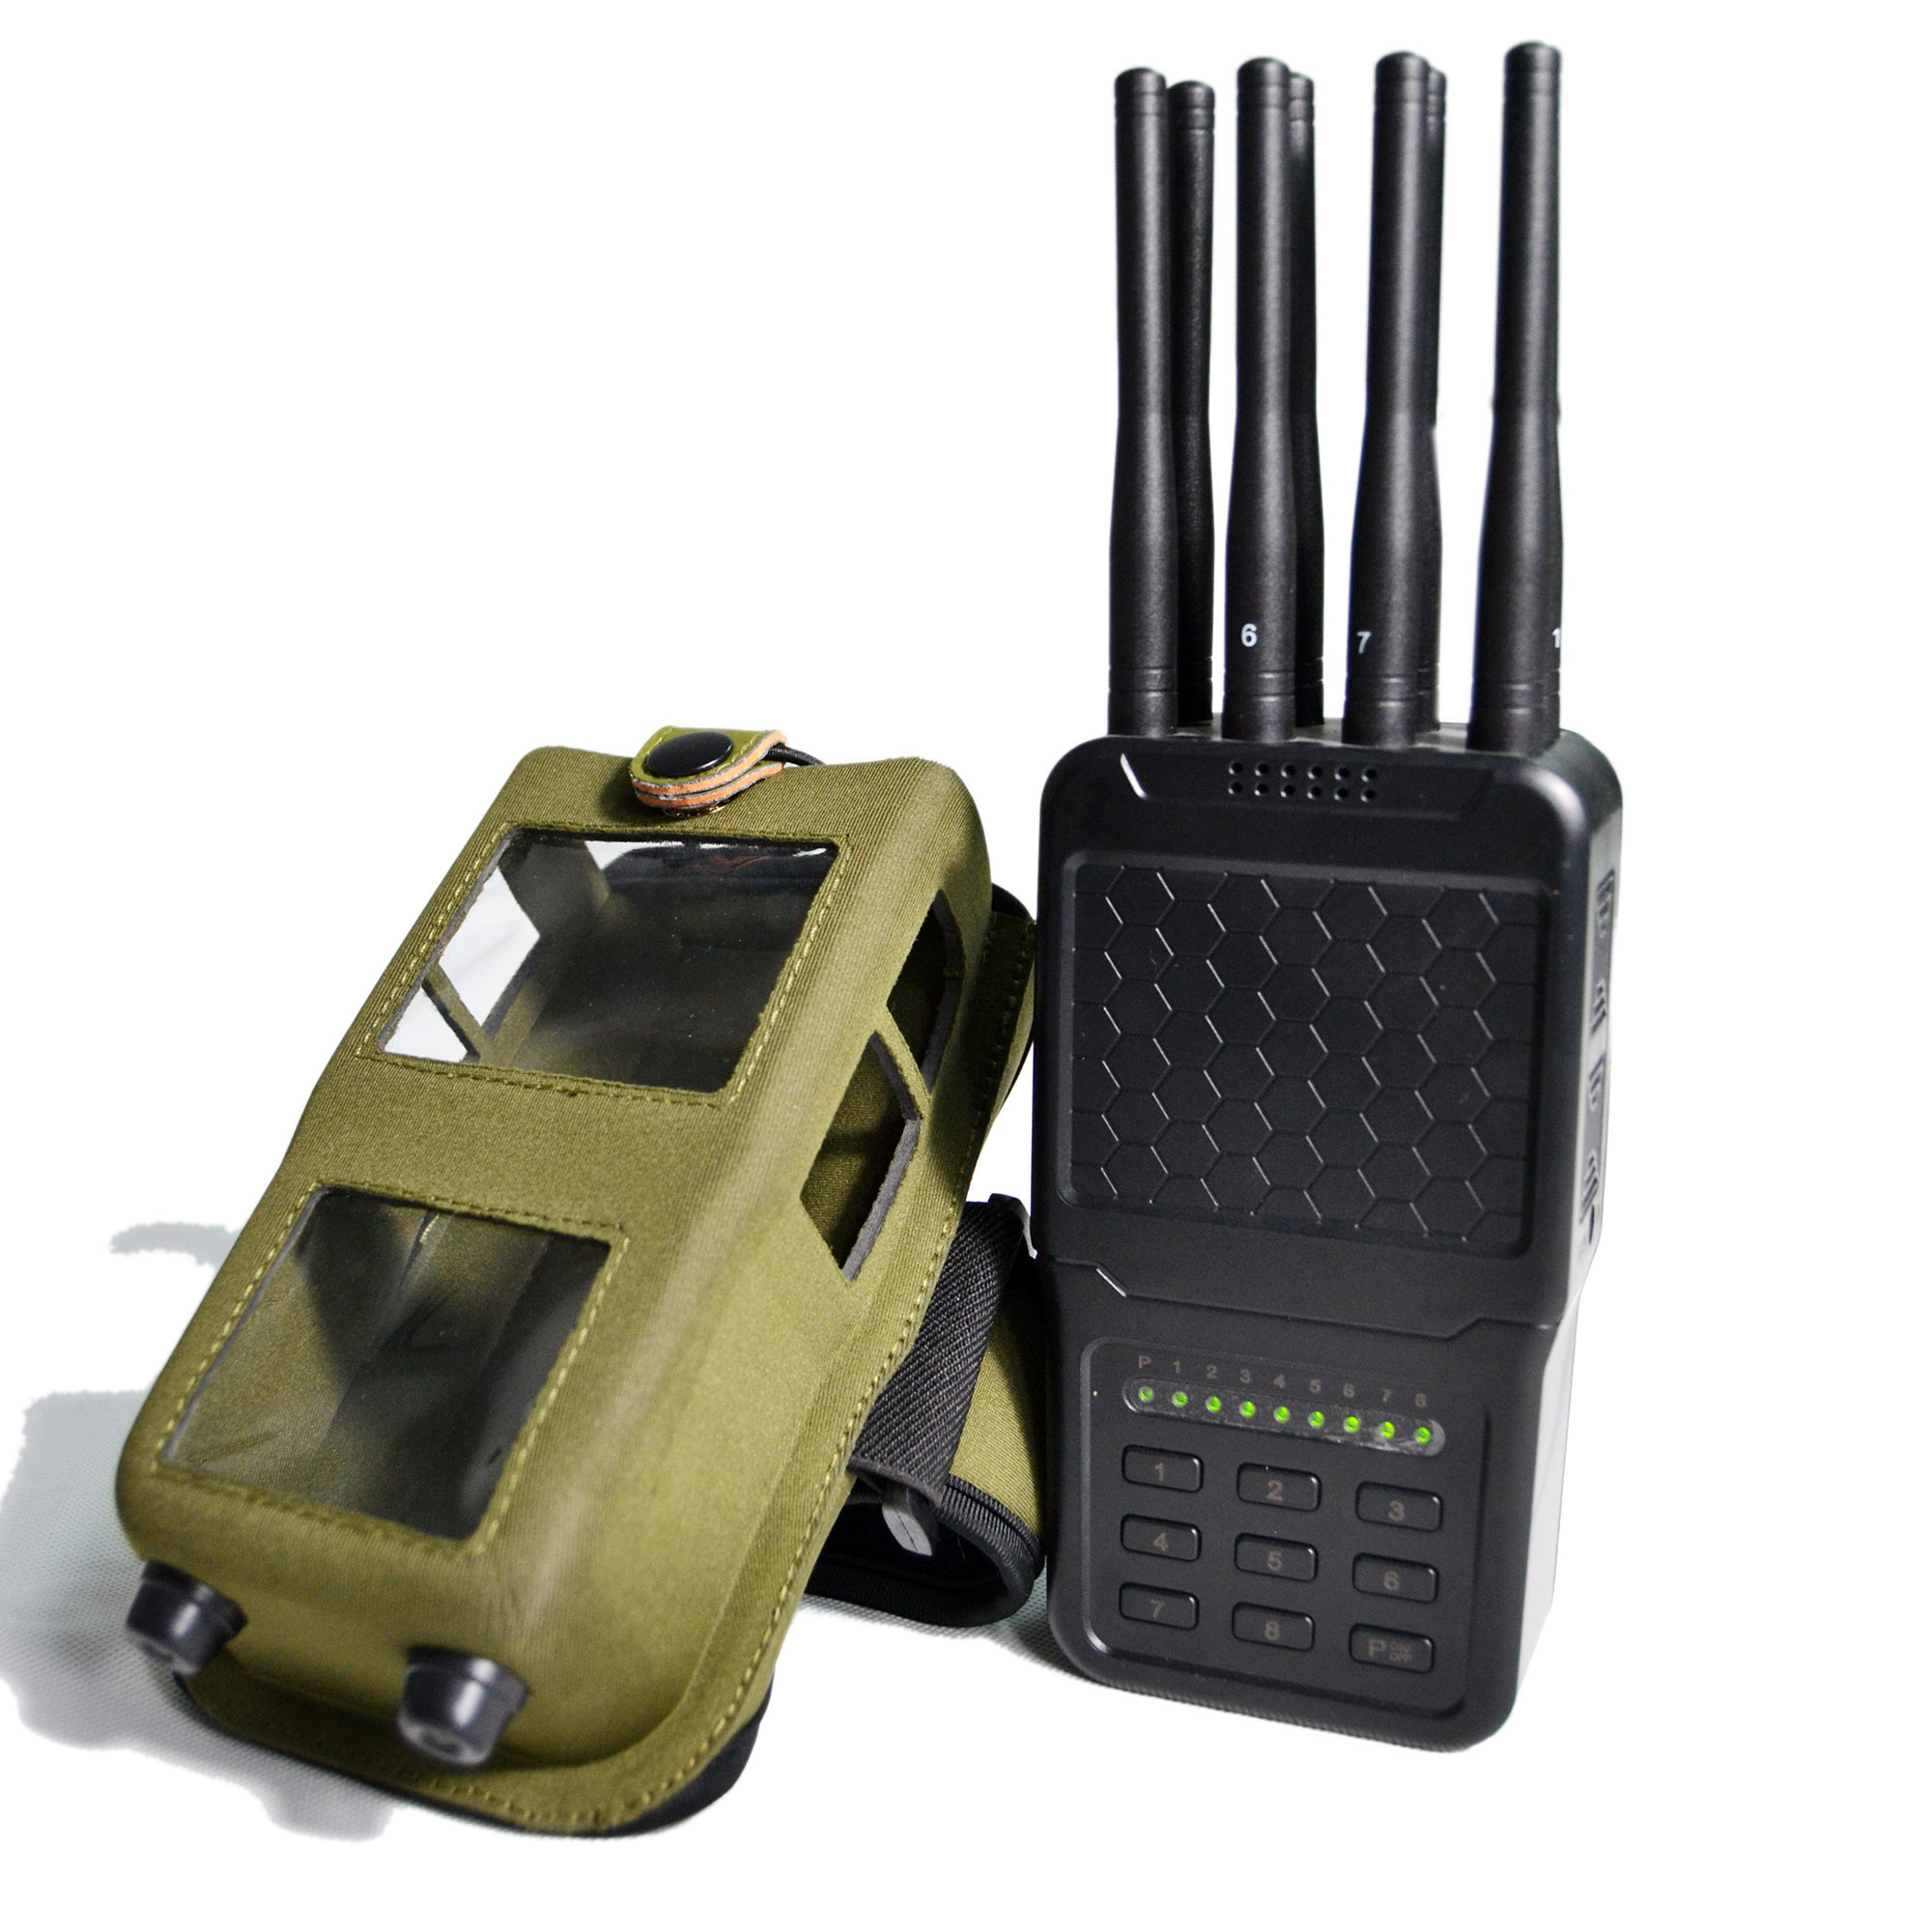 frequency jammer blocker | 8 Antenna Handheld Cell Phone Signal Jammer WIFI GPG LOJACK Blockers